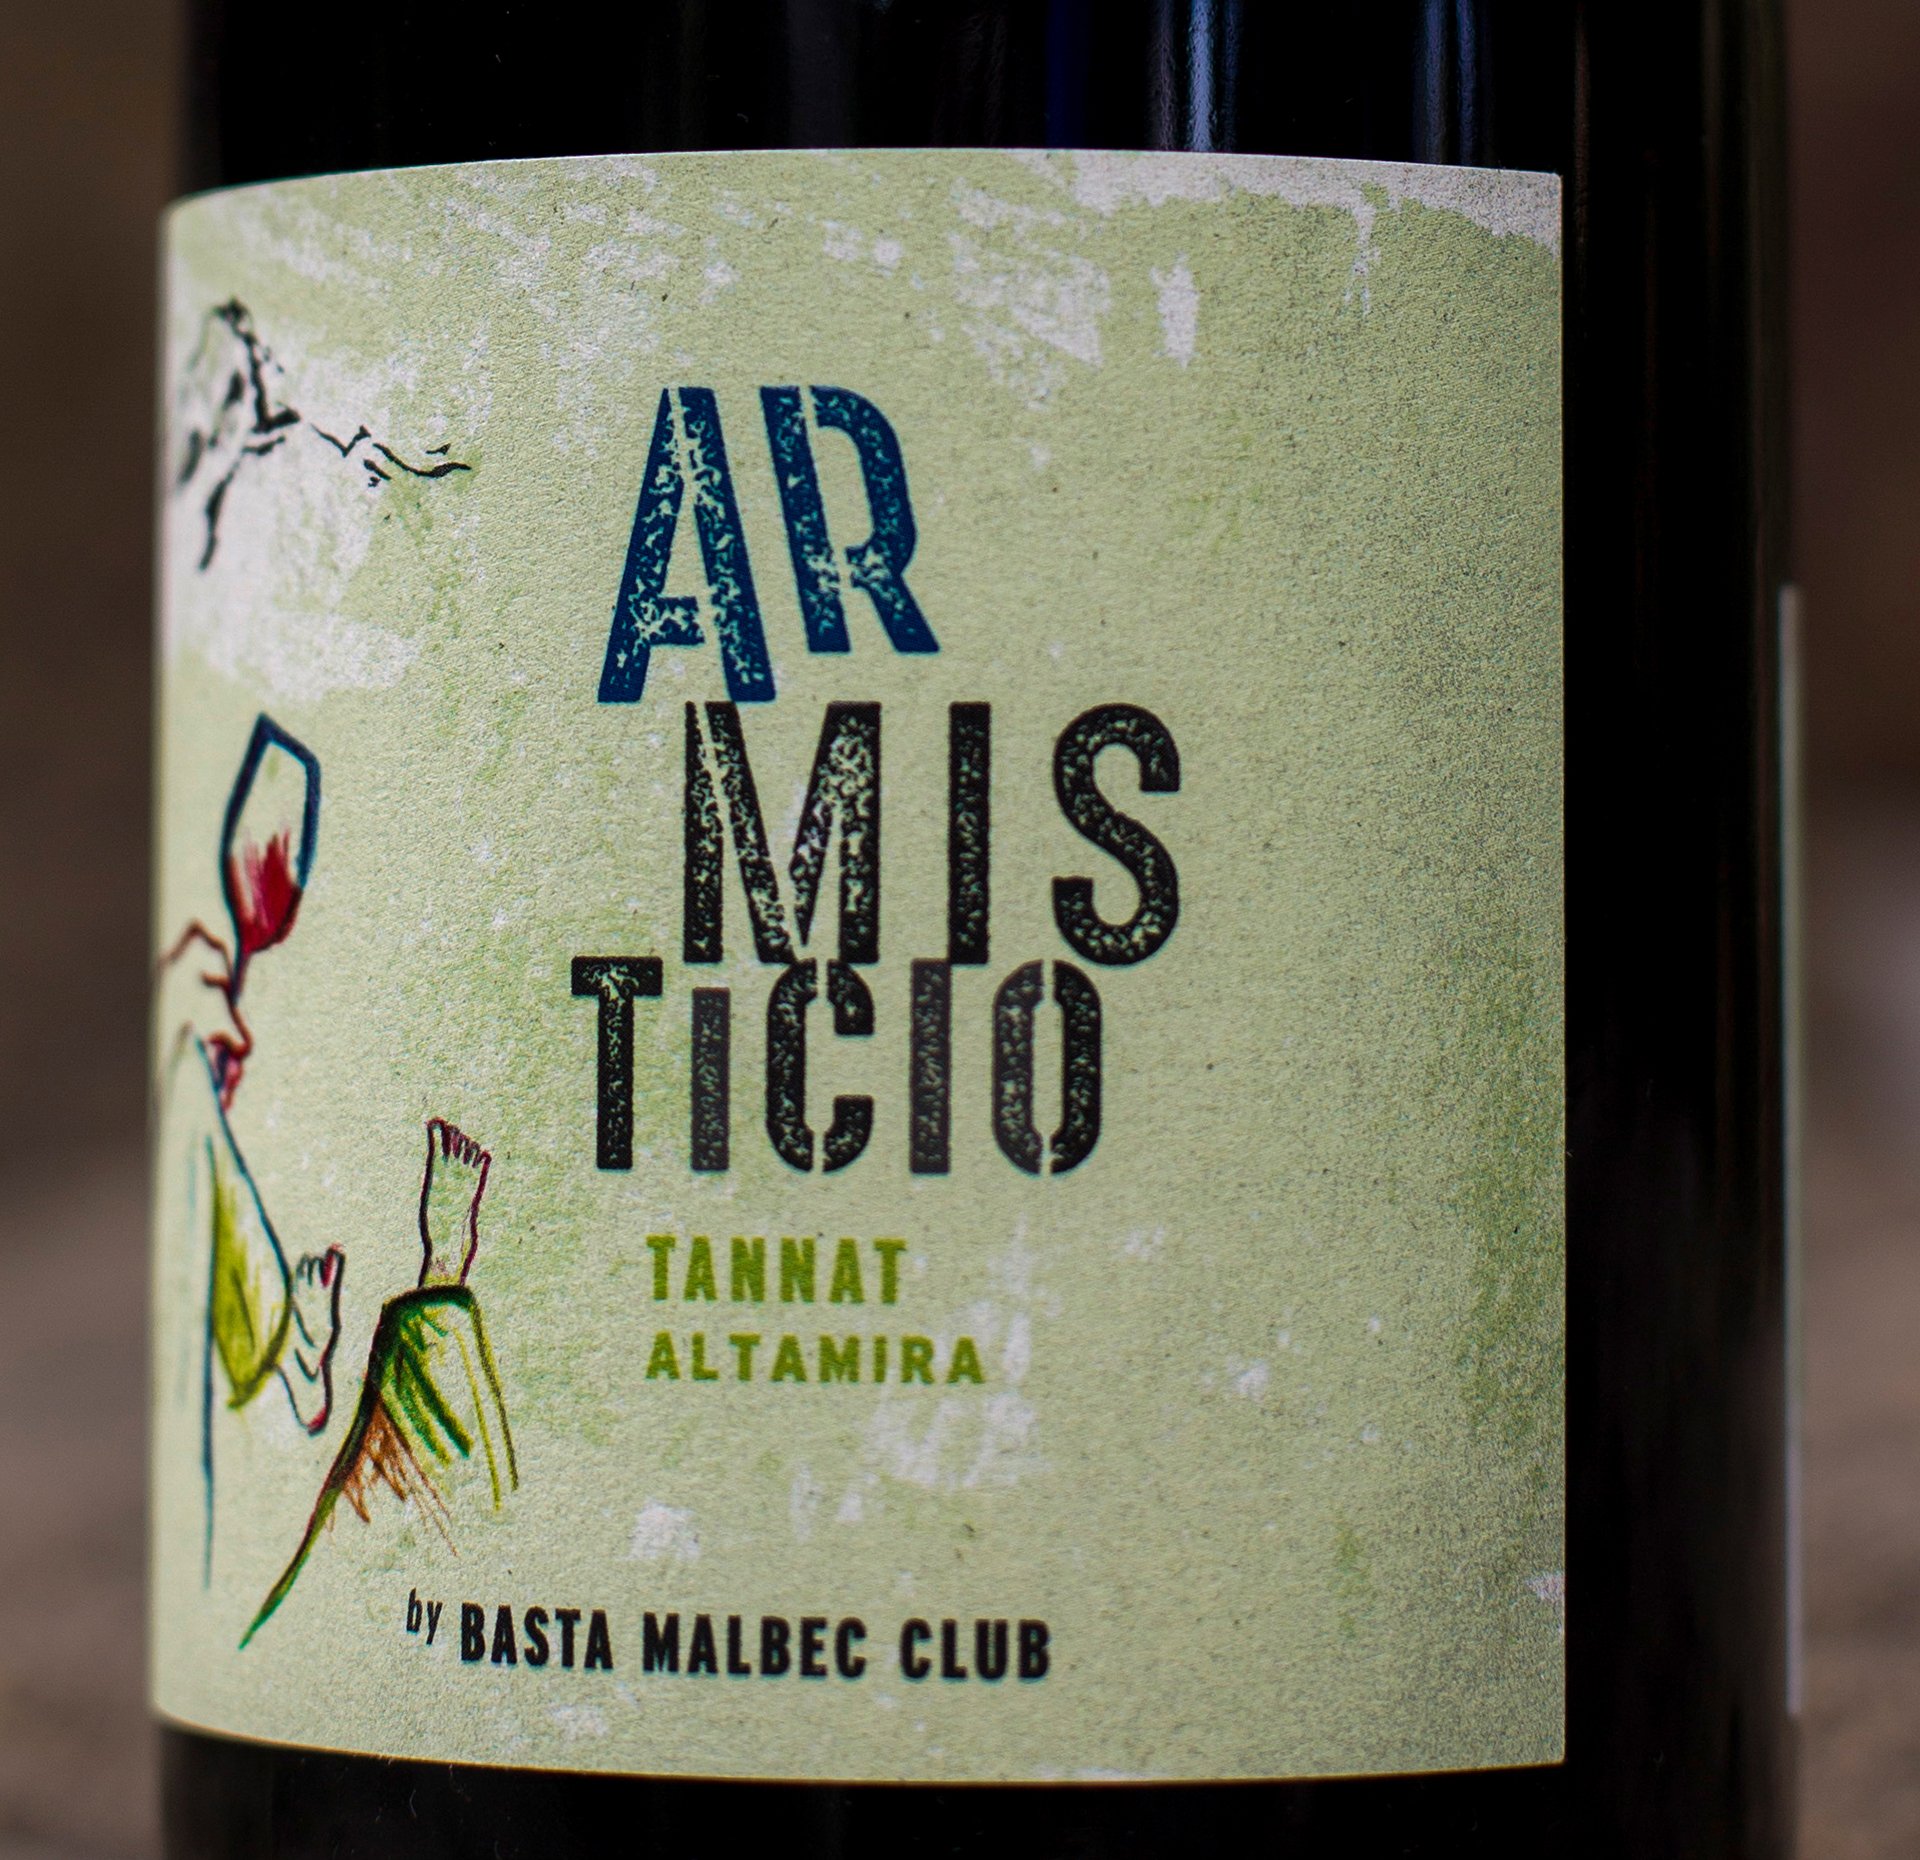 armisticio-wine-bottle-with-label.jpg